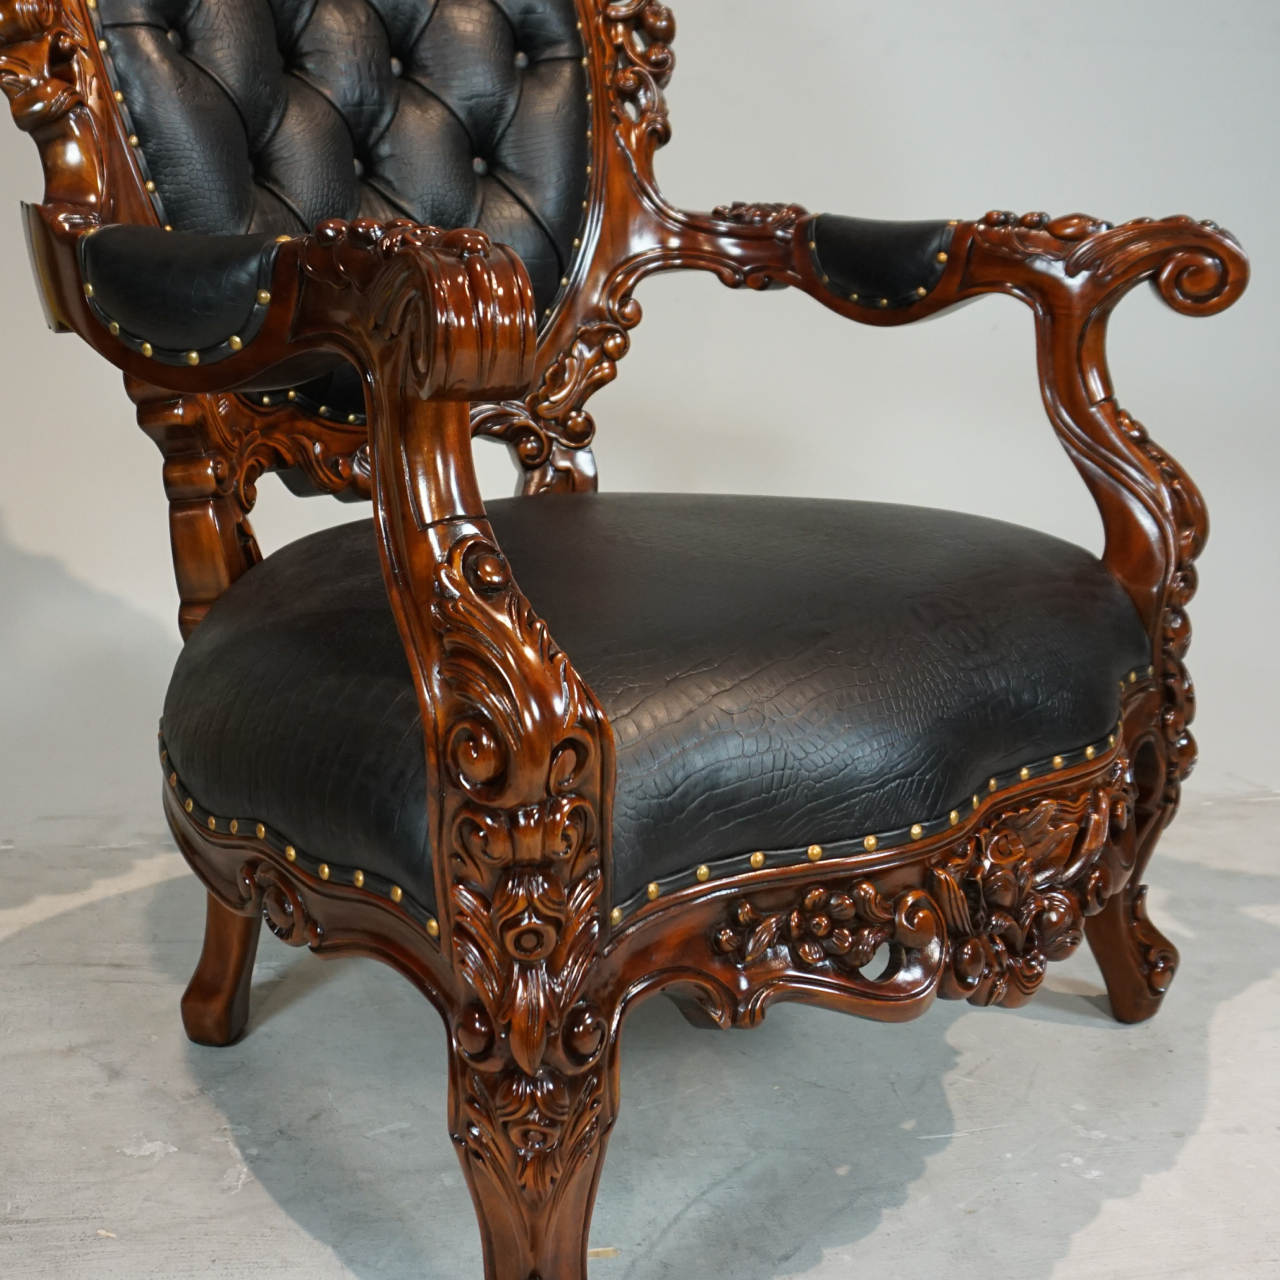 French Rococo Arm Chair Jansen Furniture